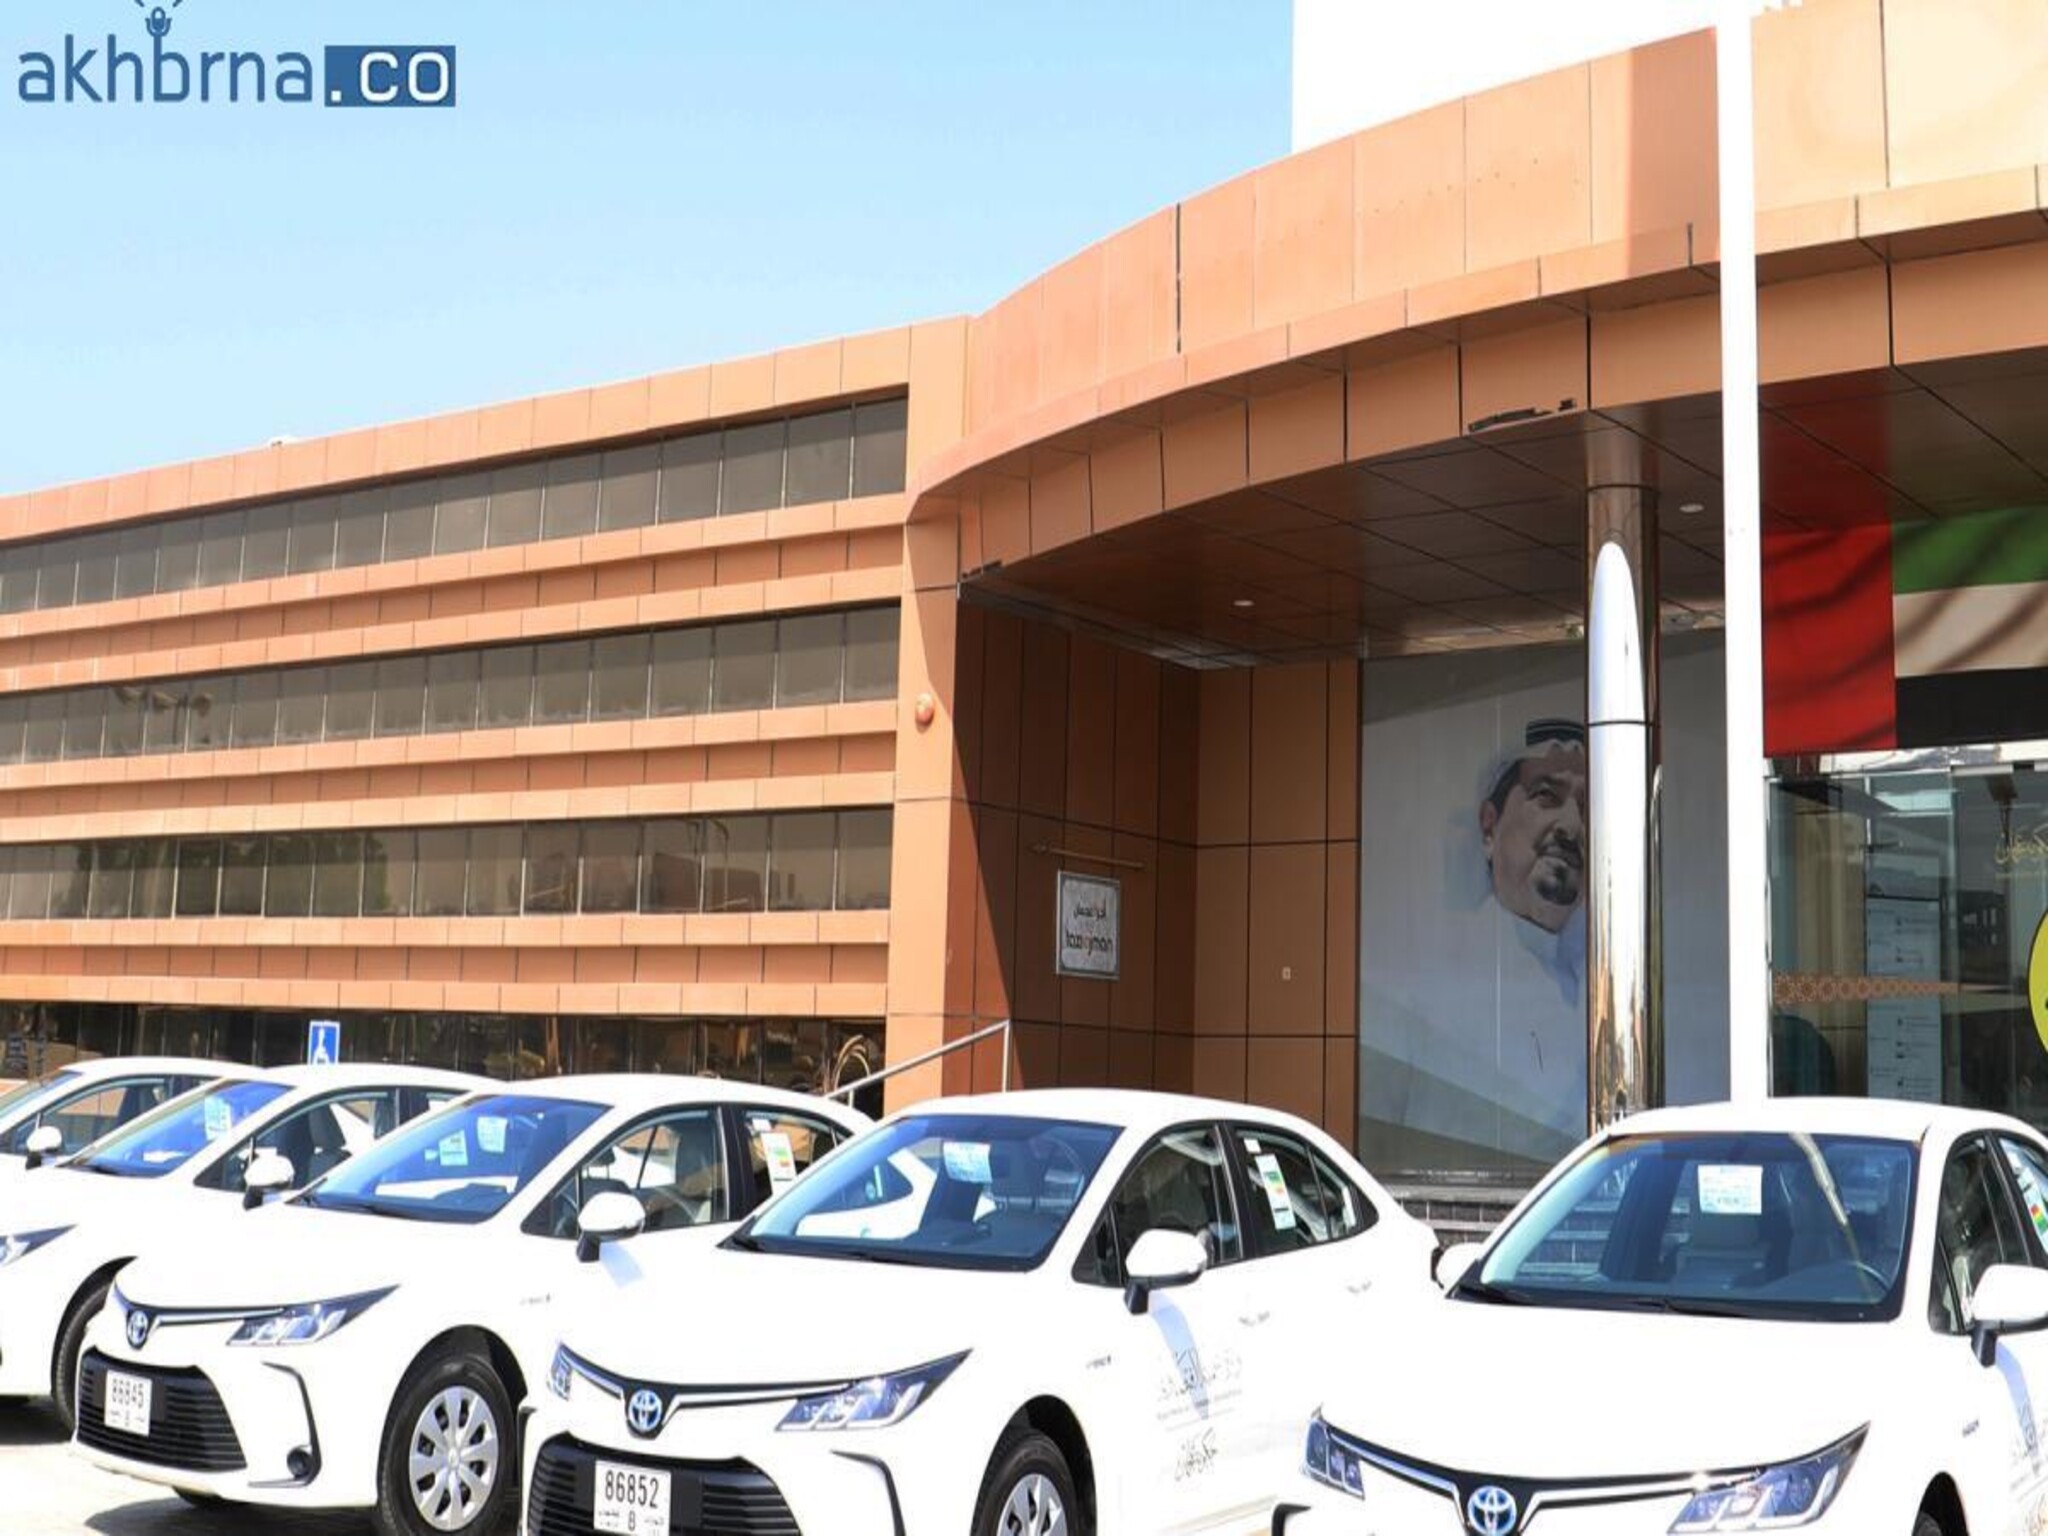 Dubai closes 3 car rental firms, imposes Dh10,000 fine for violations